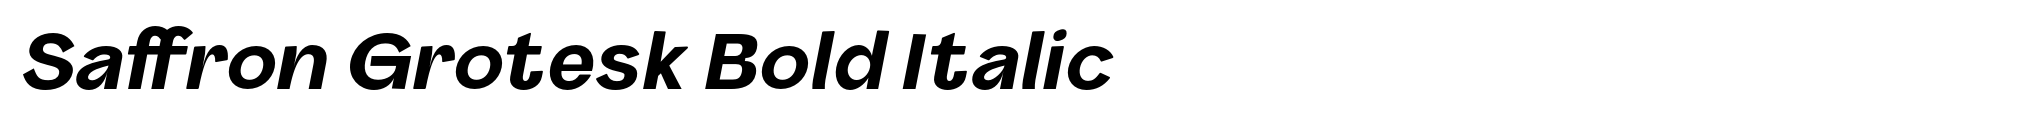 Saffron Grotesk Bold Italic image